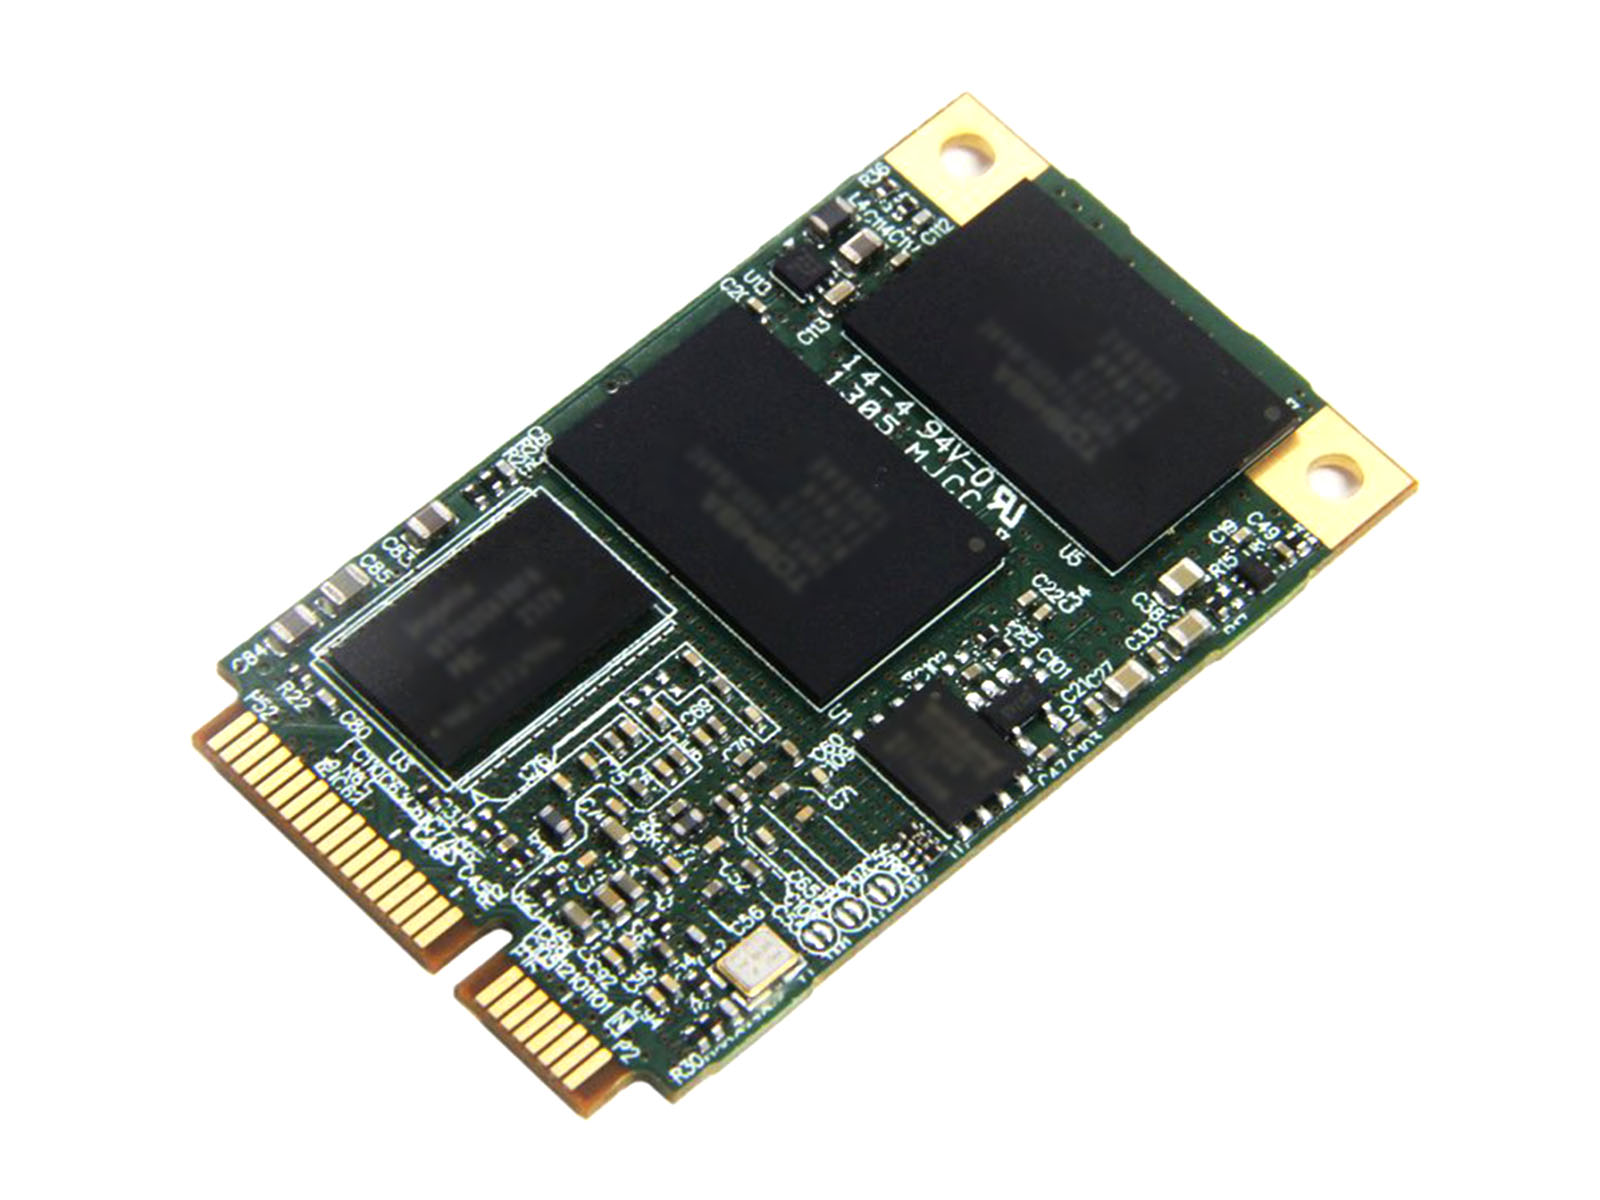 Liteon Mini pcie mSATA SSD